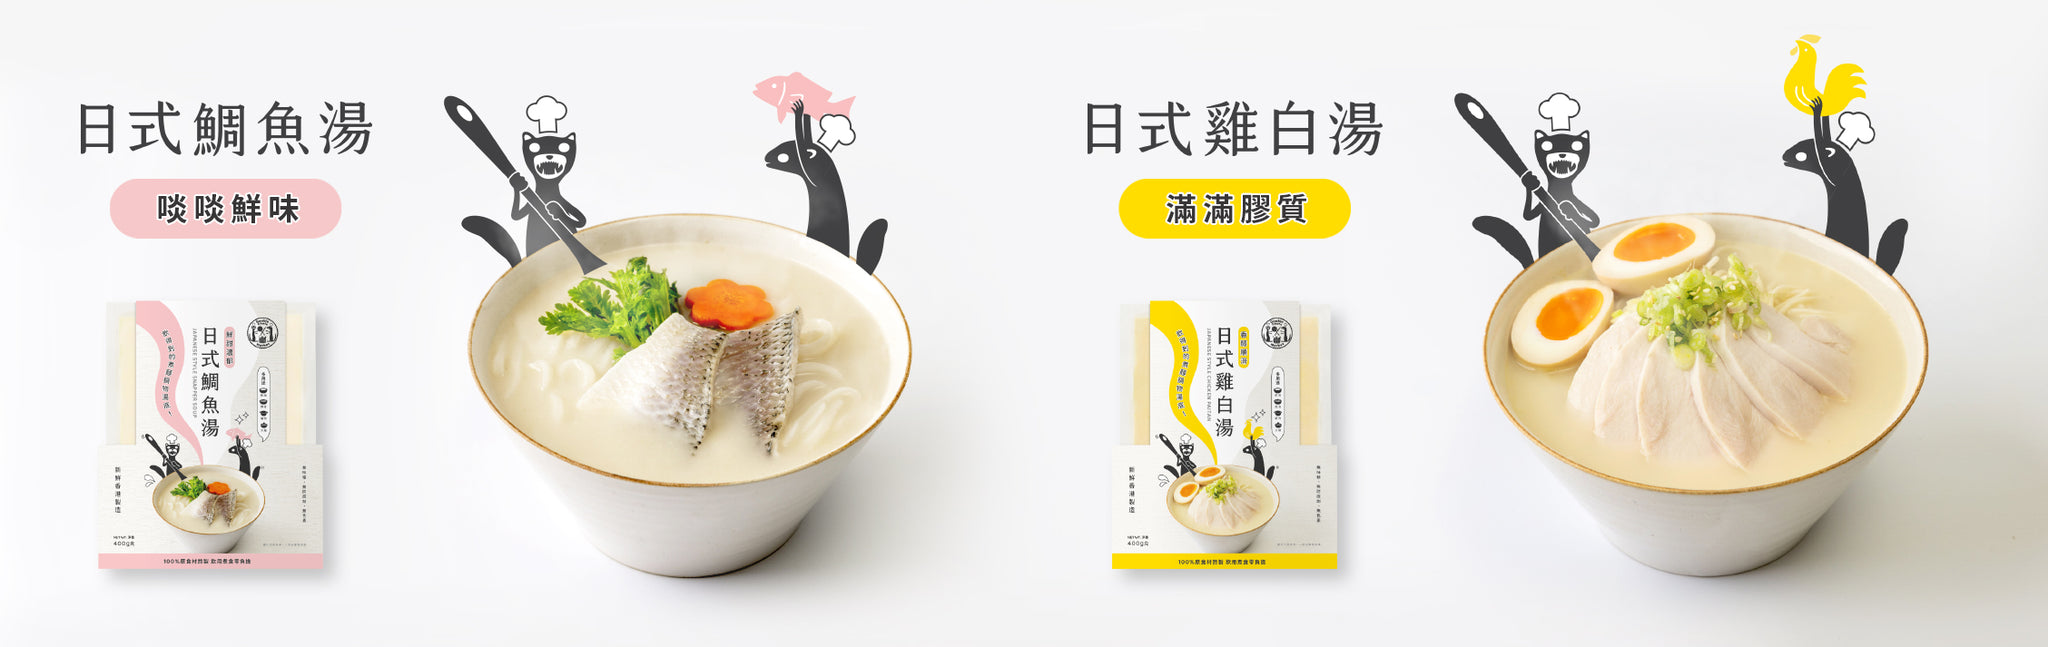 Double Chefs Market｜飲得到的煮麵鍋物湯底｜鮮濃厚白、零添加｜100% 新鮮香港製造 